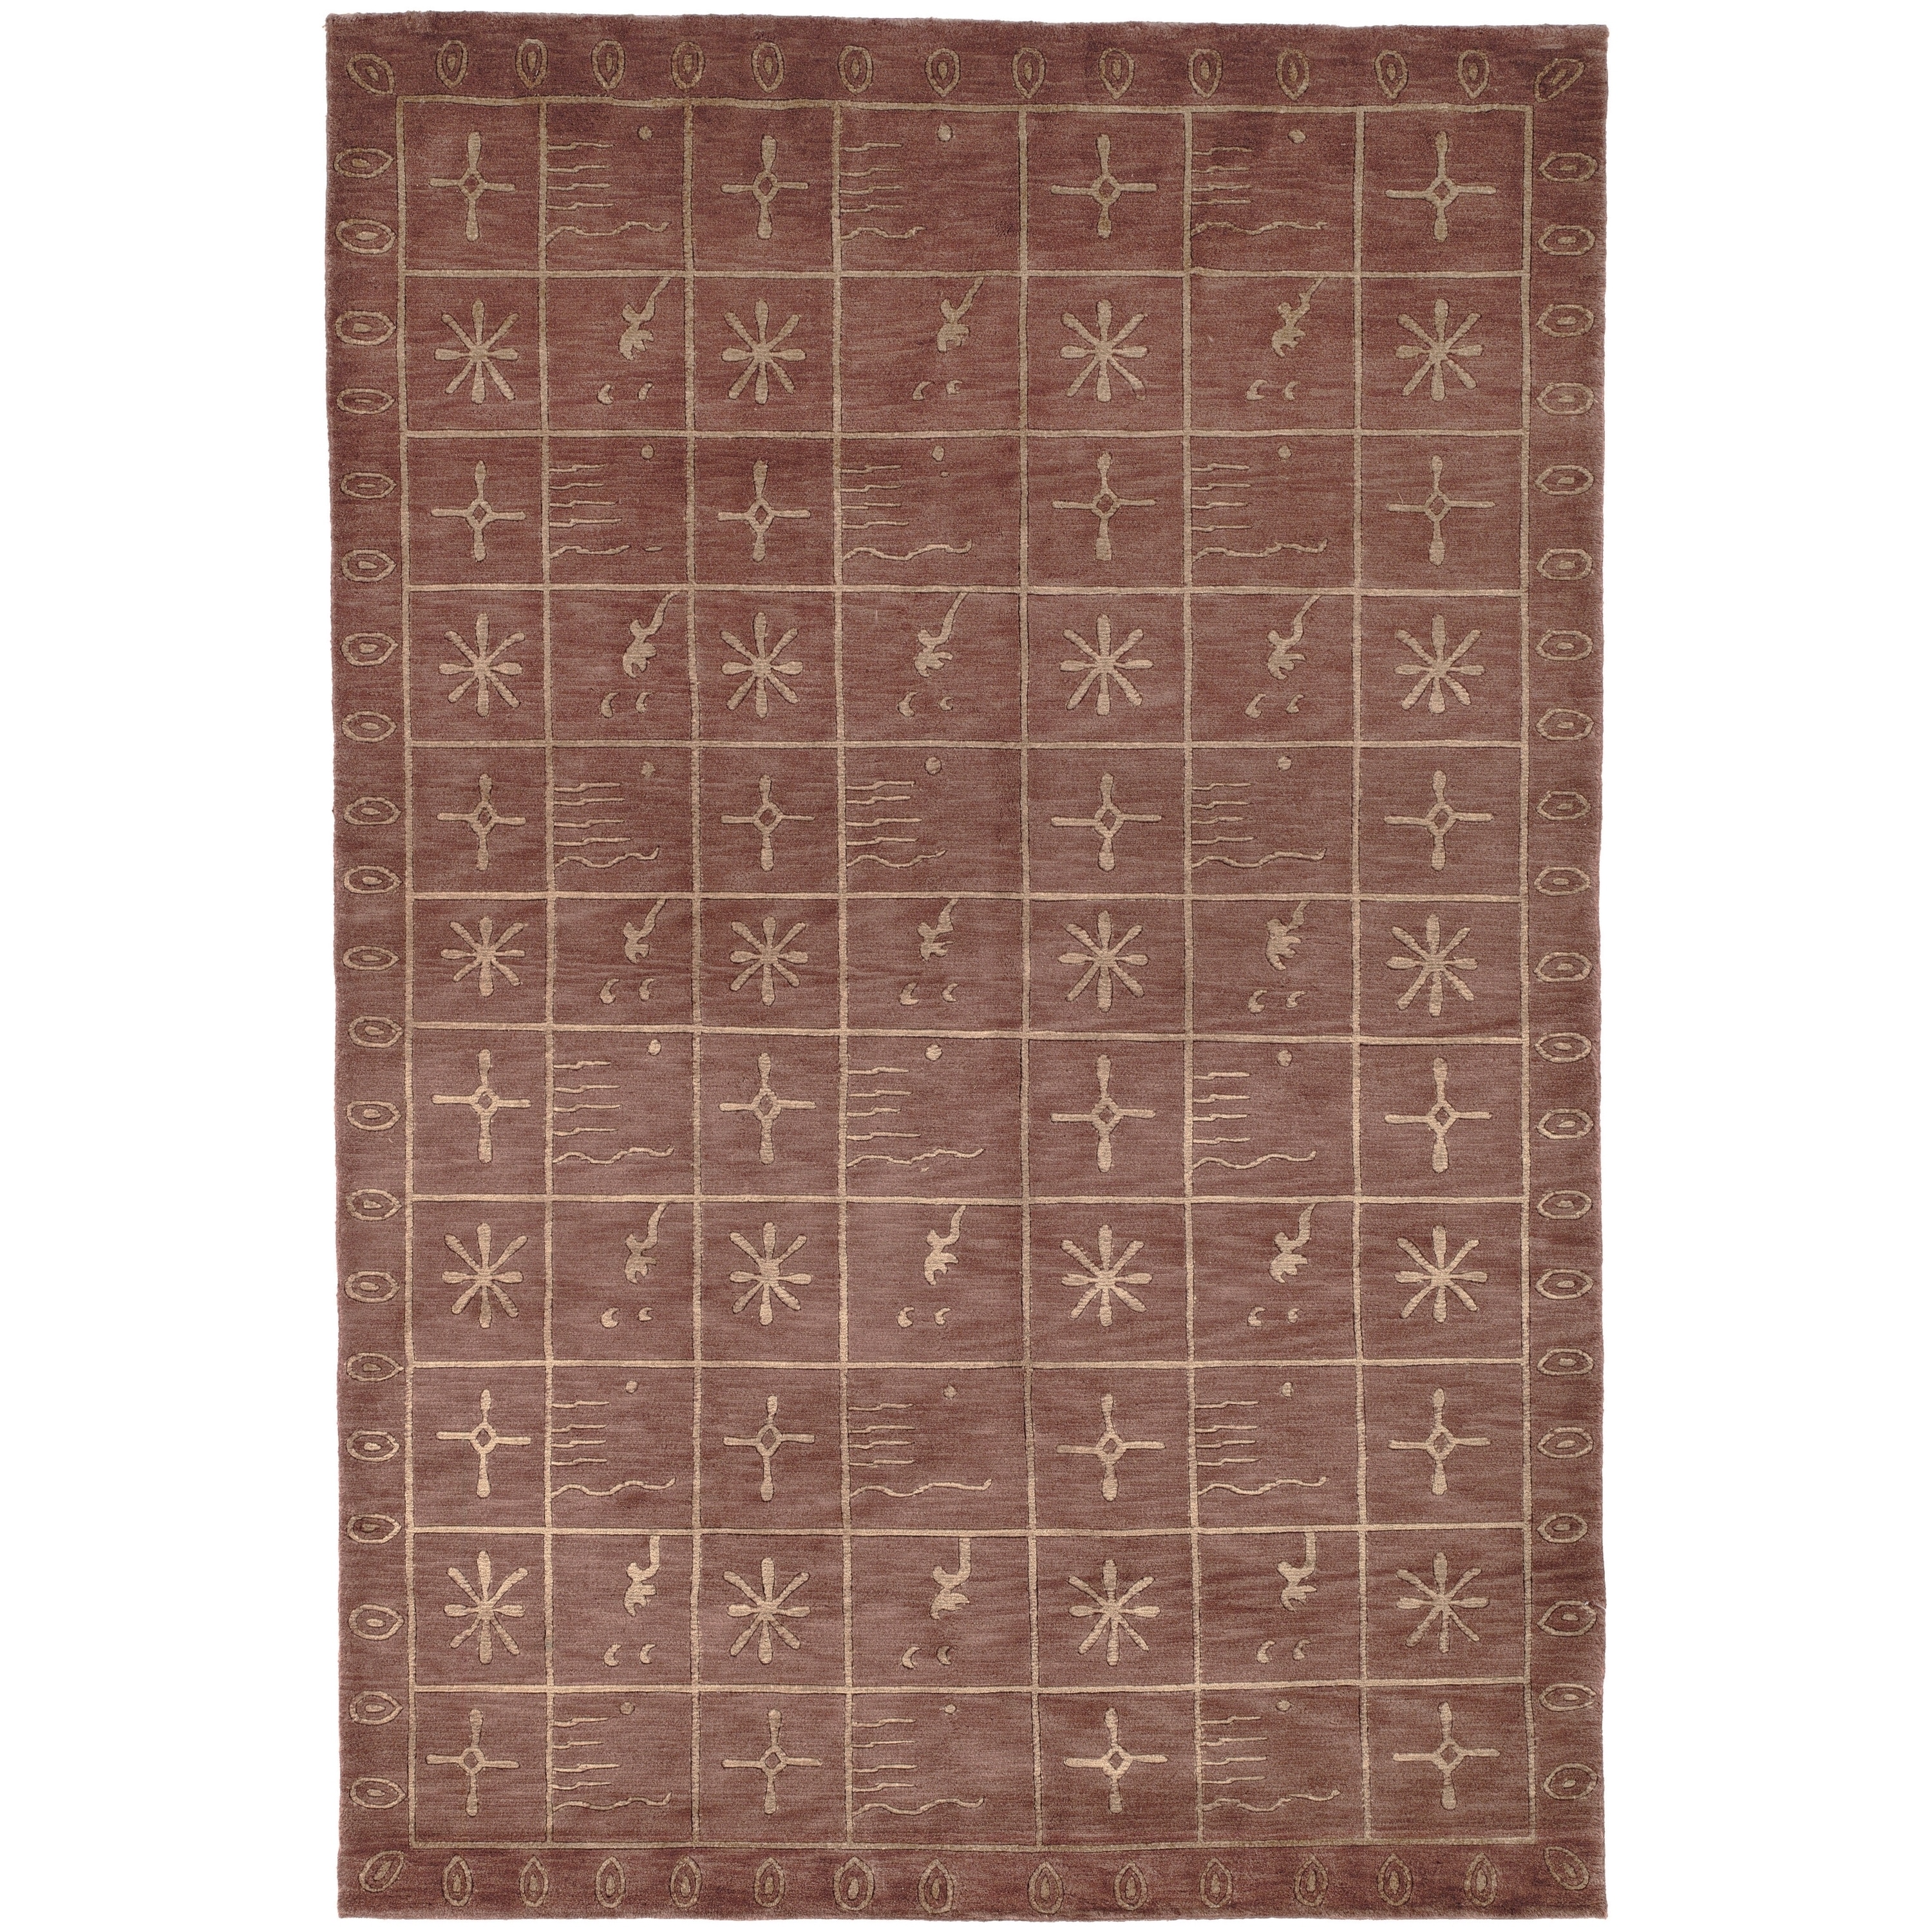 Safavieh Hand knotted Tibetan Multicolored Geometric Wool/ Silk Rug (5 X 76)